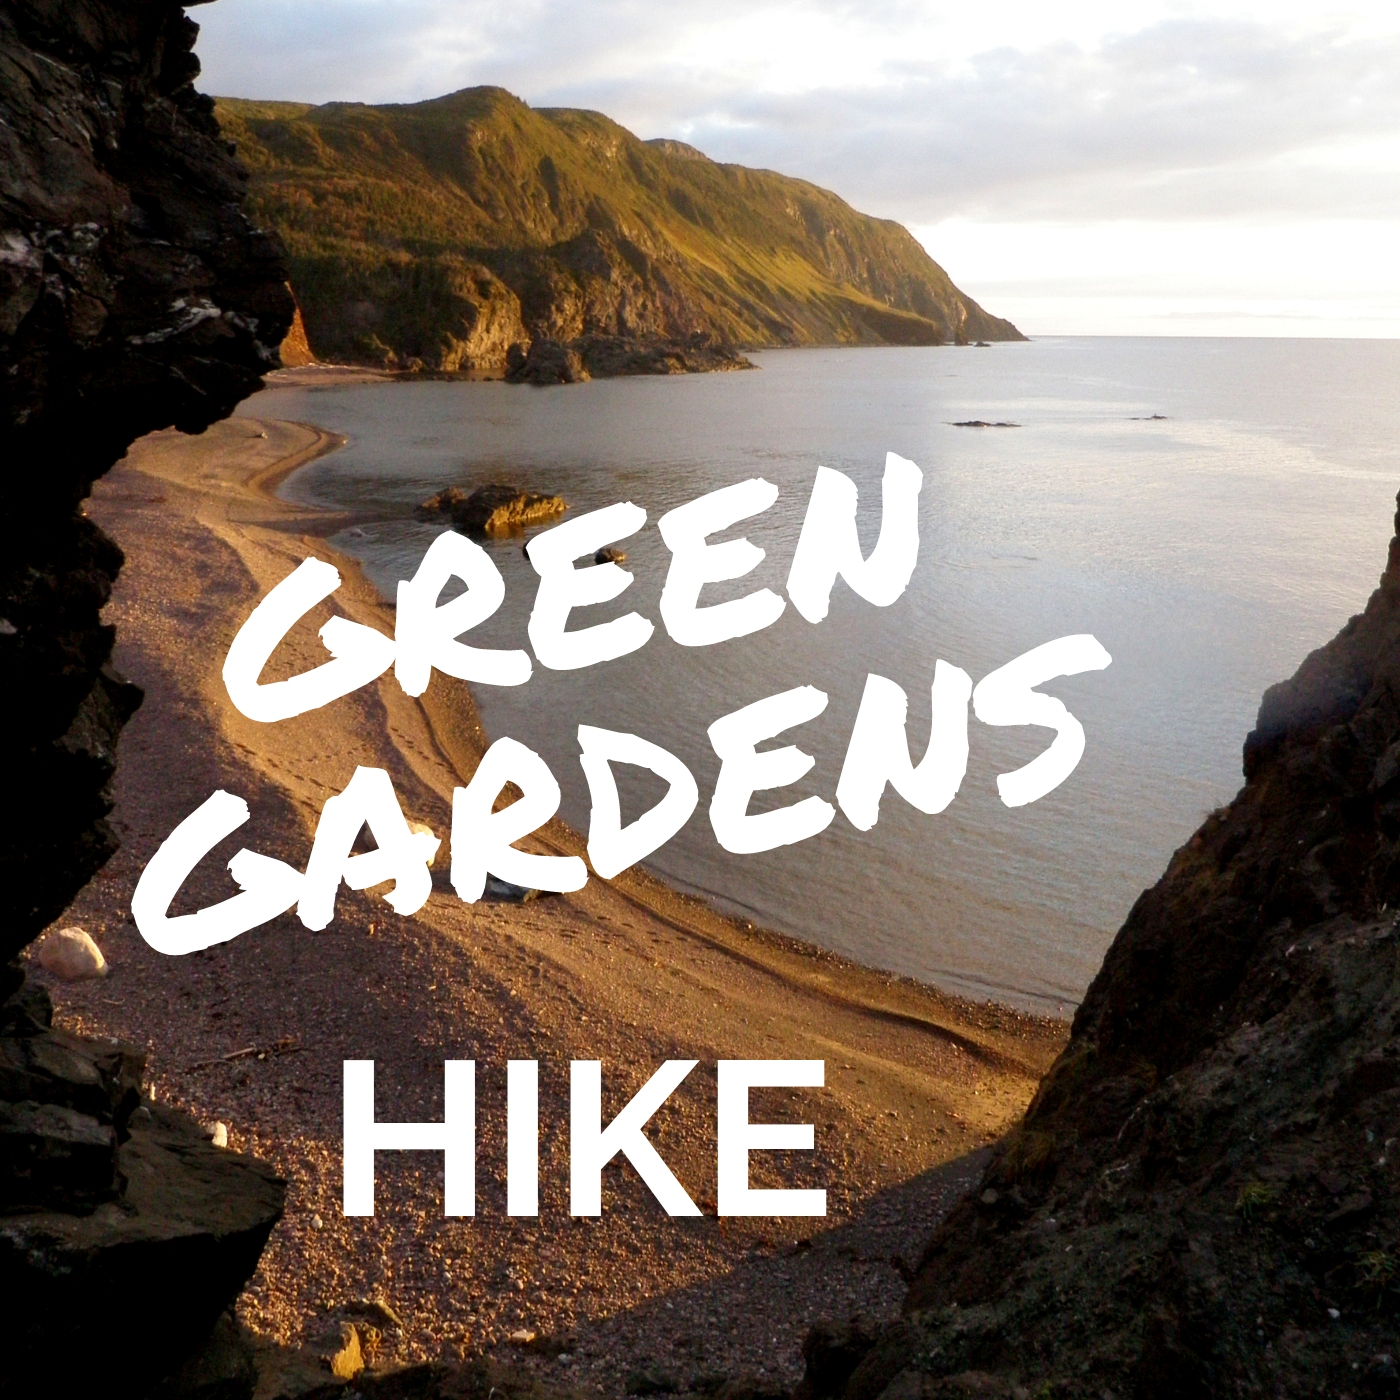 Green Gardens hike: volcanic rocks and vibrant greens, Green Gardens Gros Morne National park, Newfoundland hiking, Wildly Intrepid